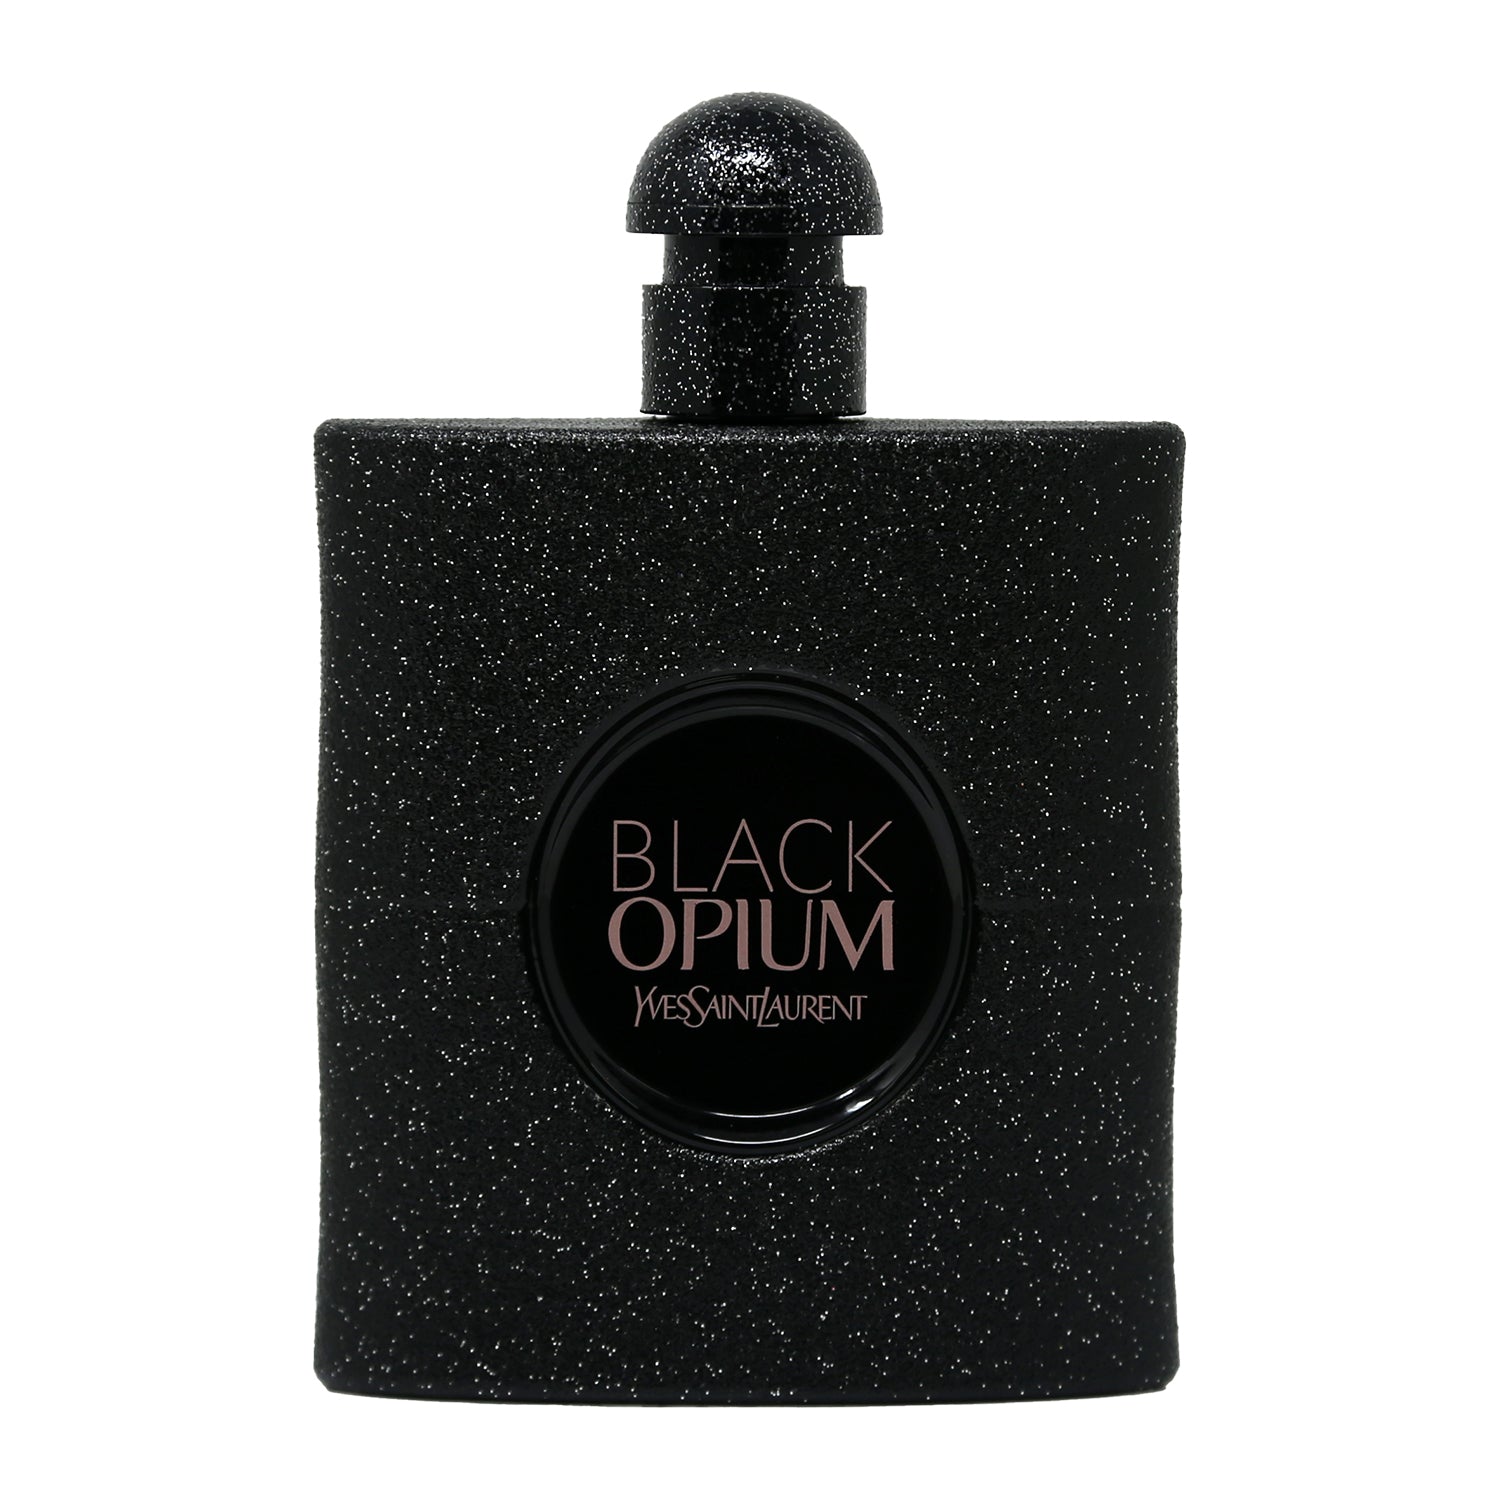 Black Opium by Yves Saint Laurent Fragrance Samples, DecantX